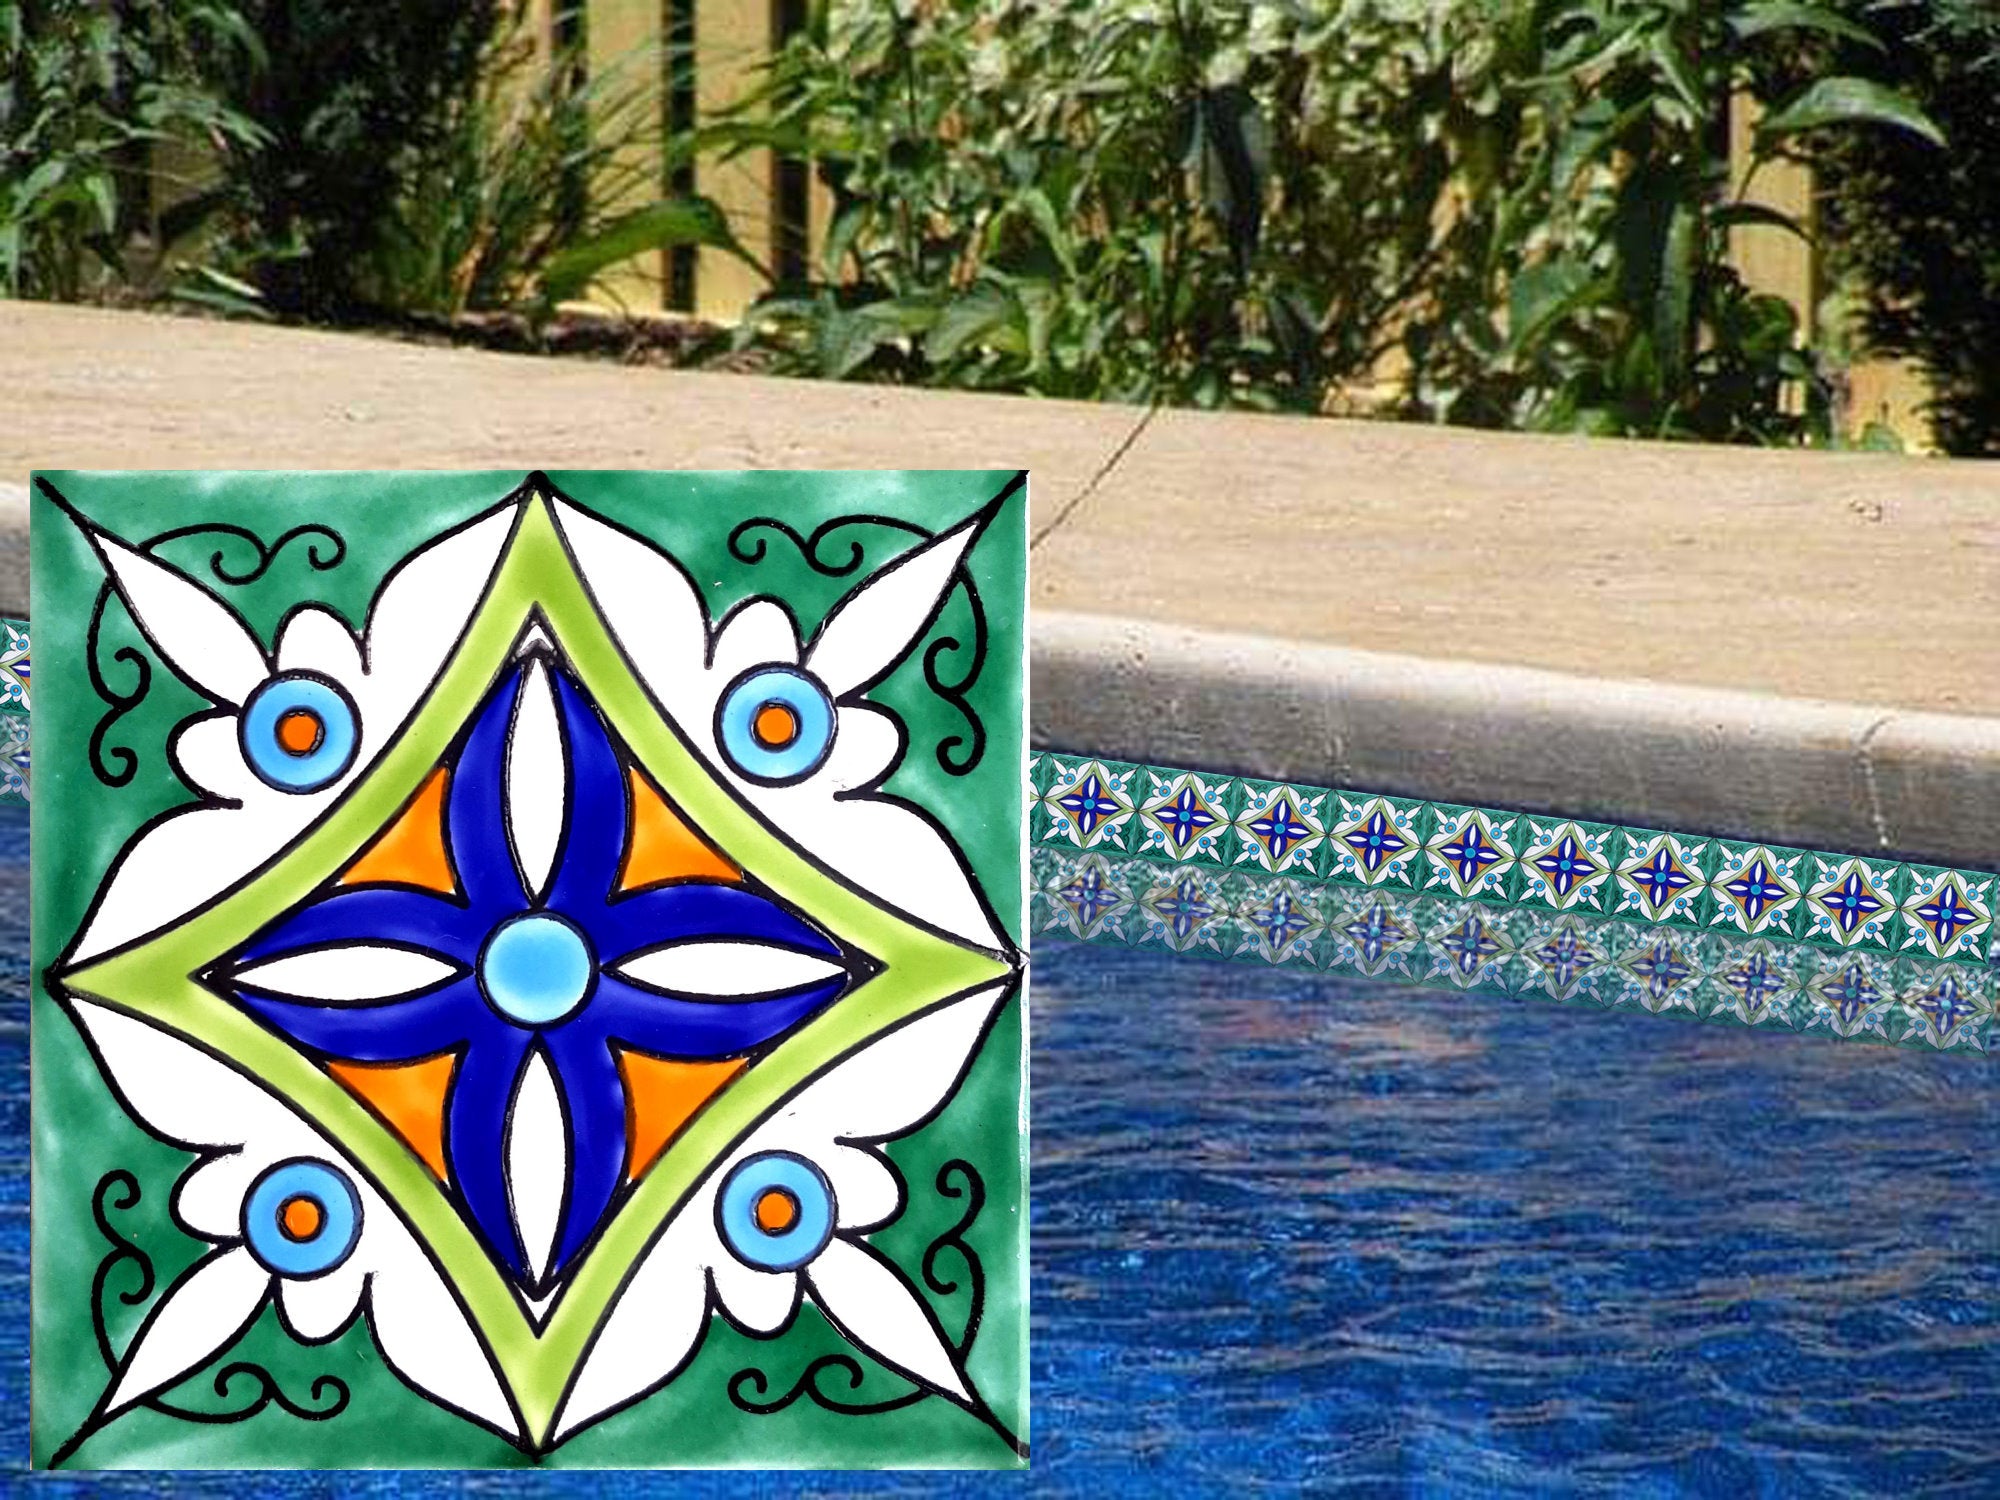 Starlite Design Waterline Tile 6x6